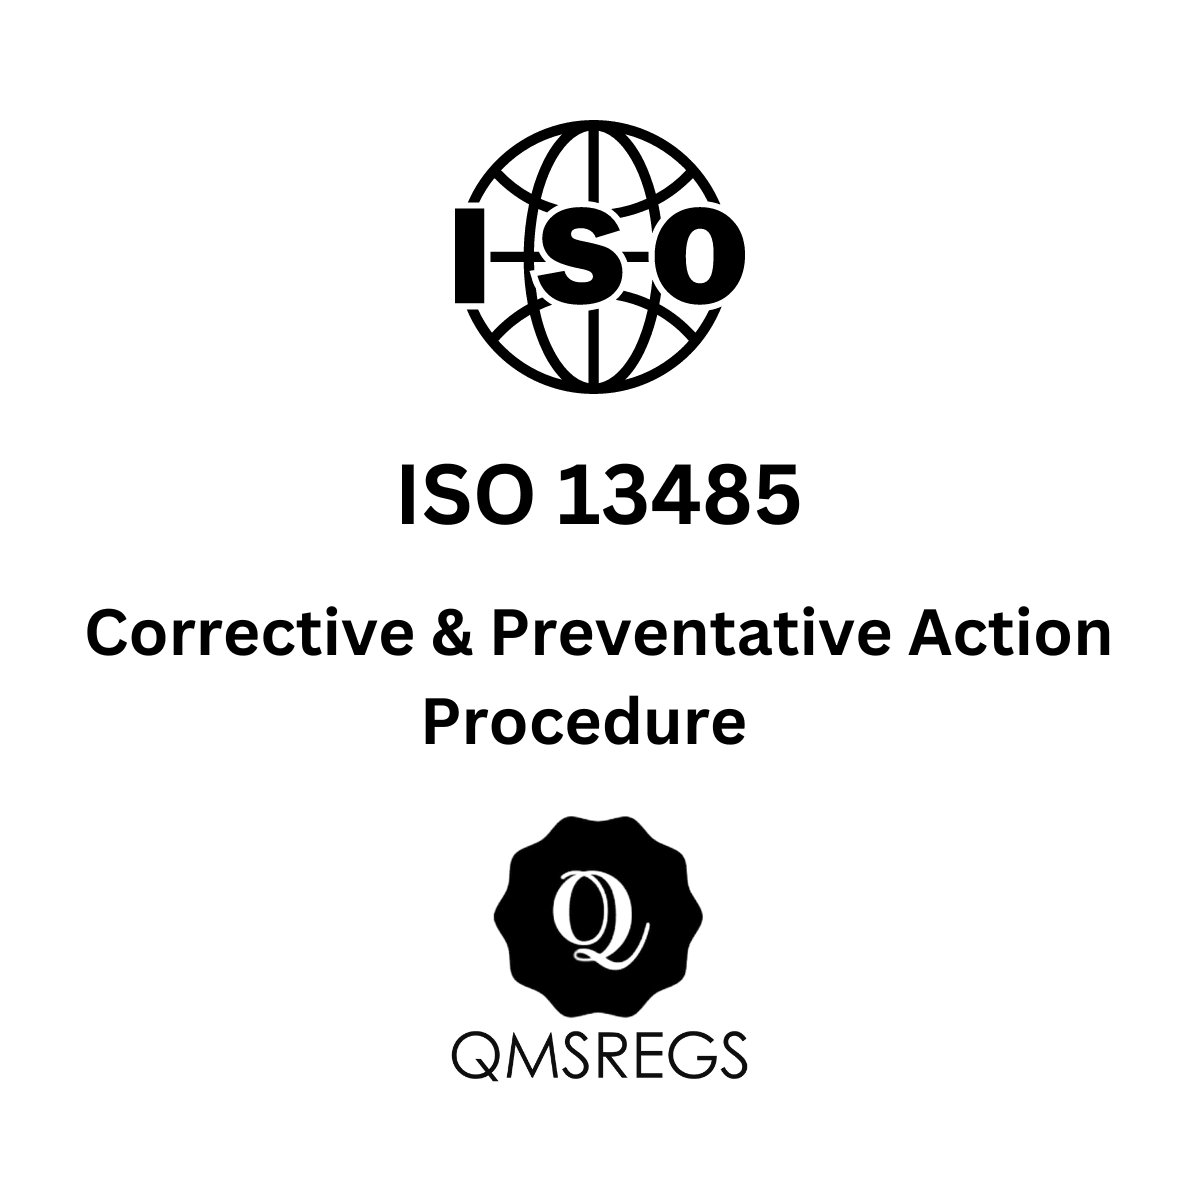 ISO 13485 Corrective and Preventative Action (CAPA) Procedure Template